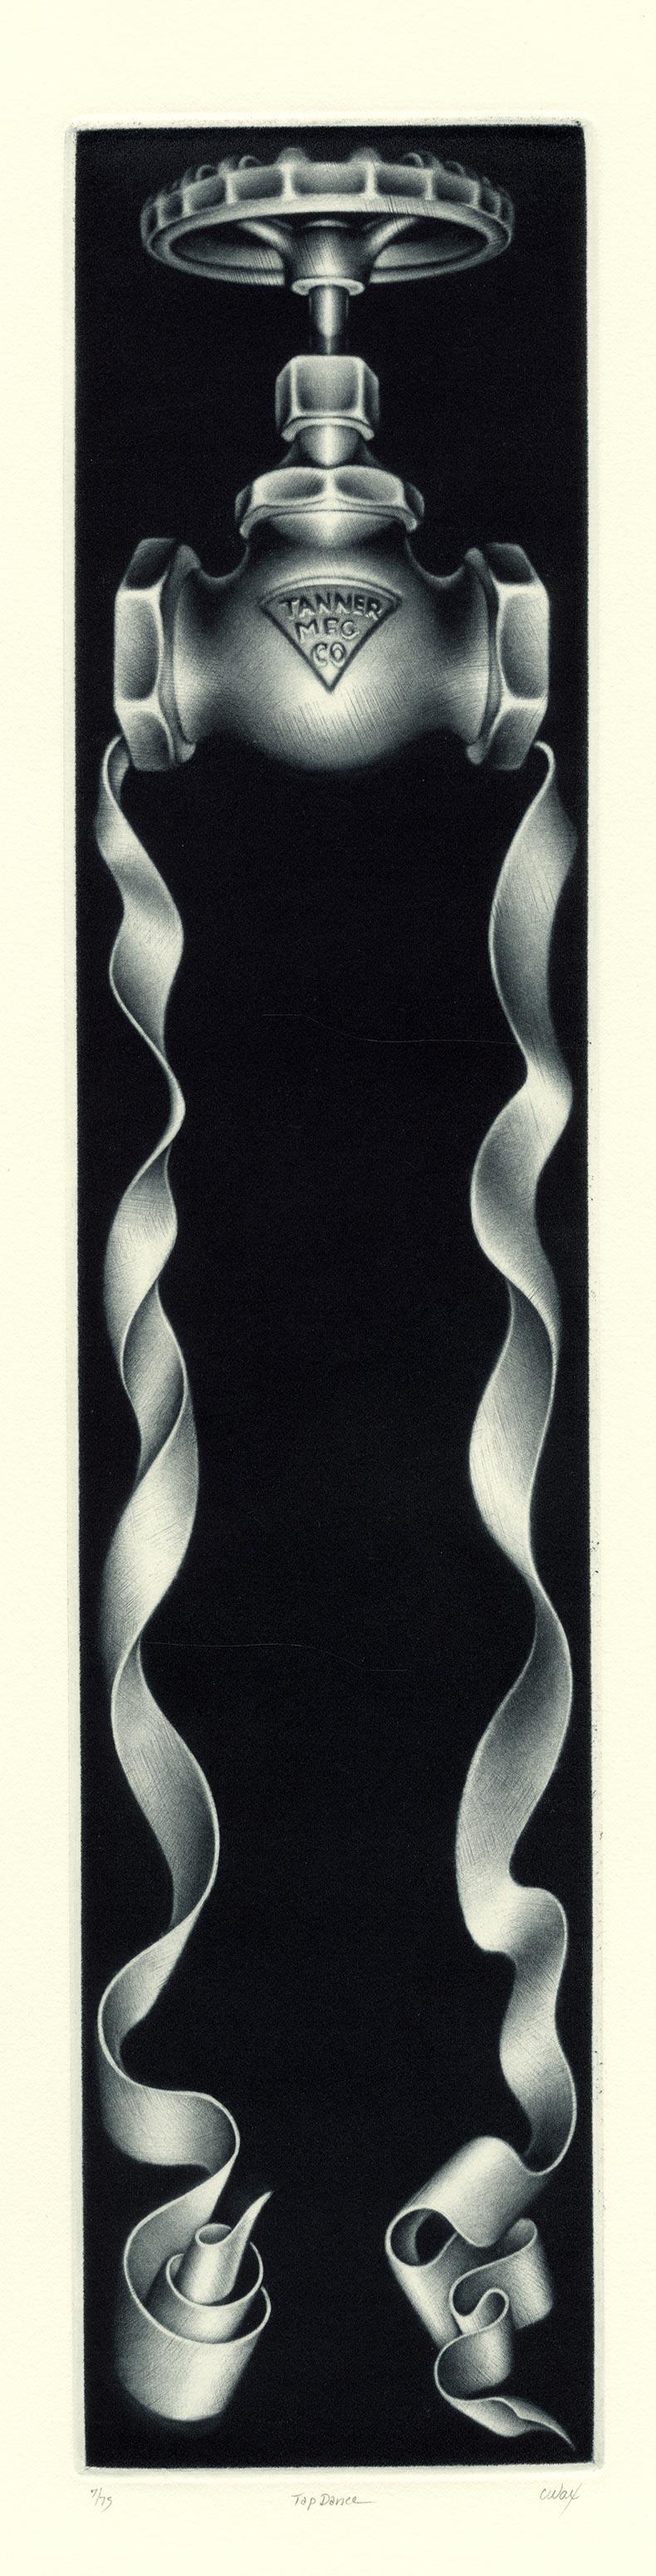 Tap Dance - American Modern Print by Carol Wax